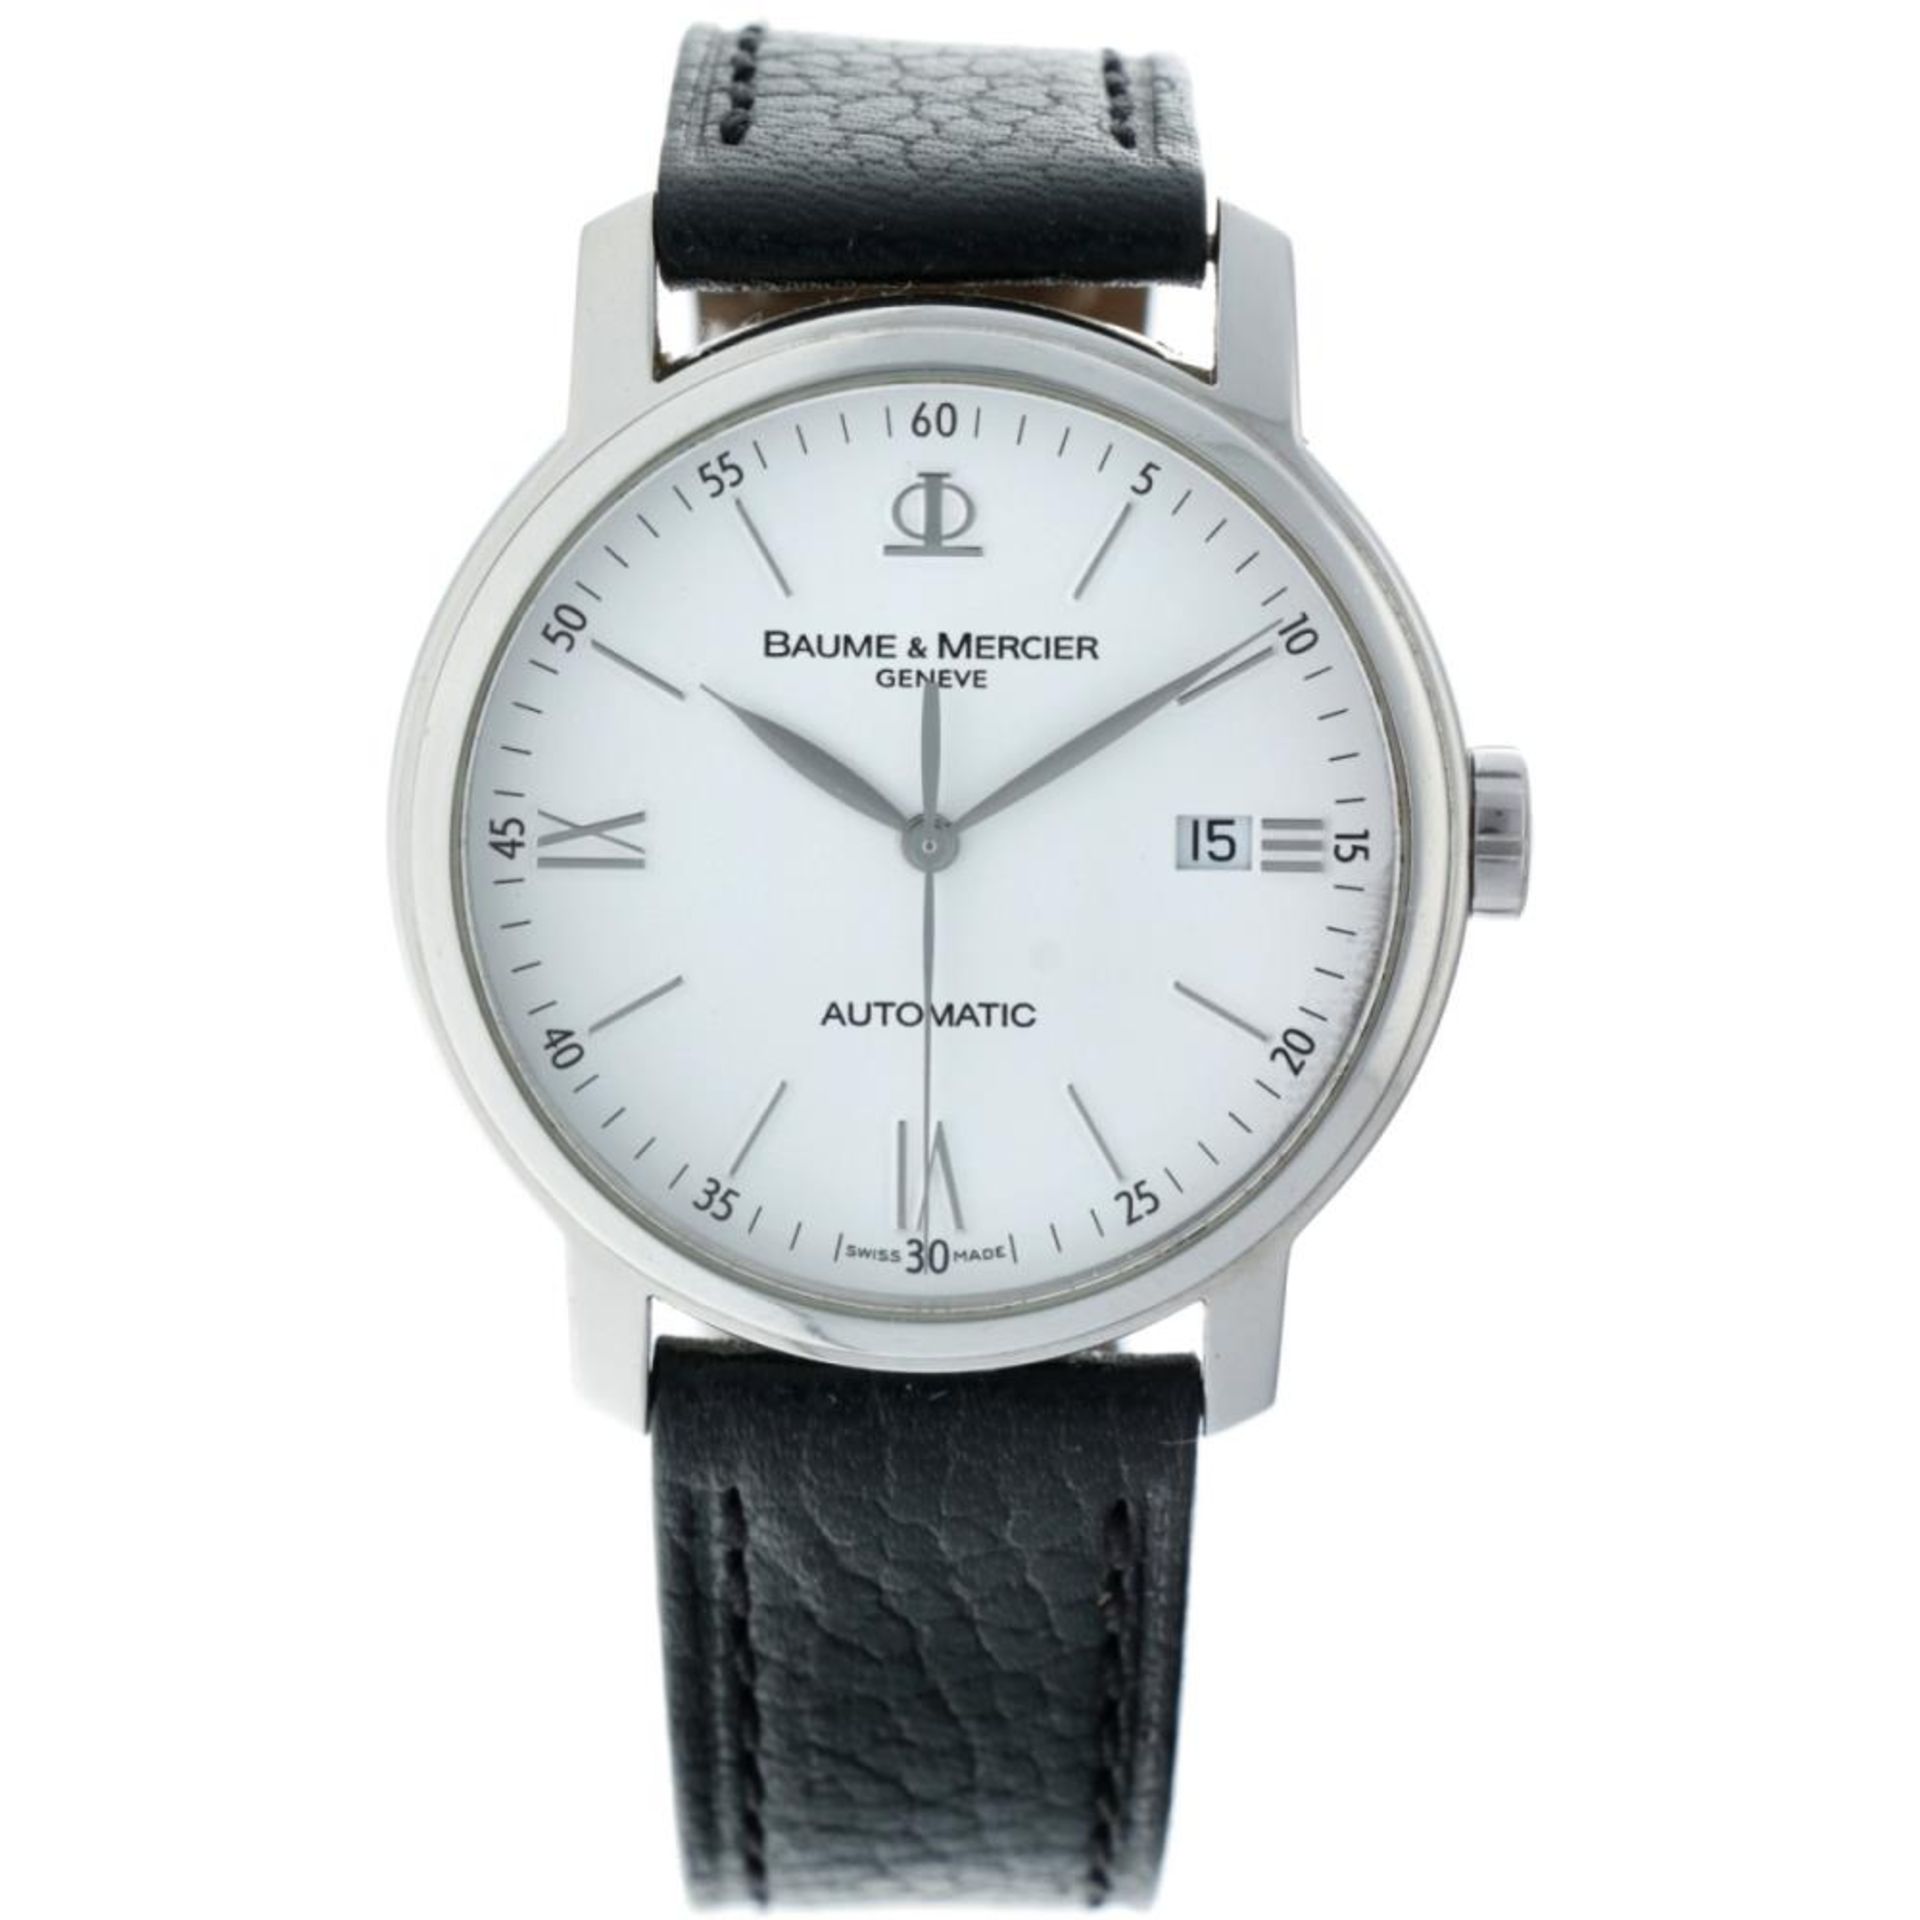 Baume & Mercier Classima 65554 - Men's watch - approx. 2010.